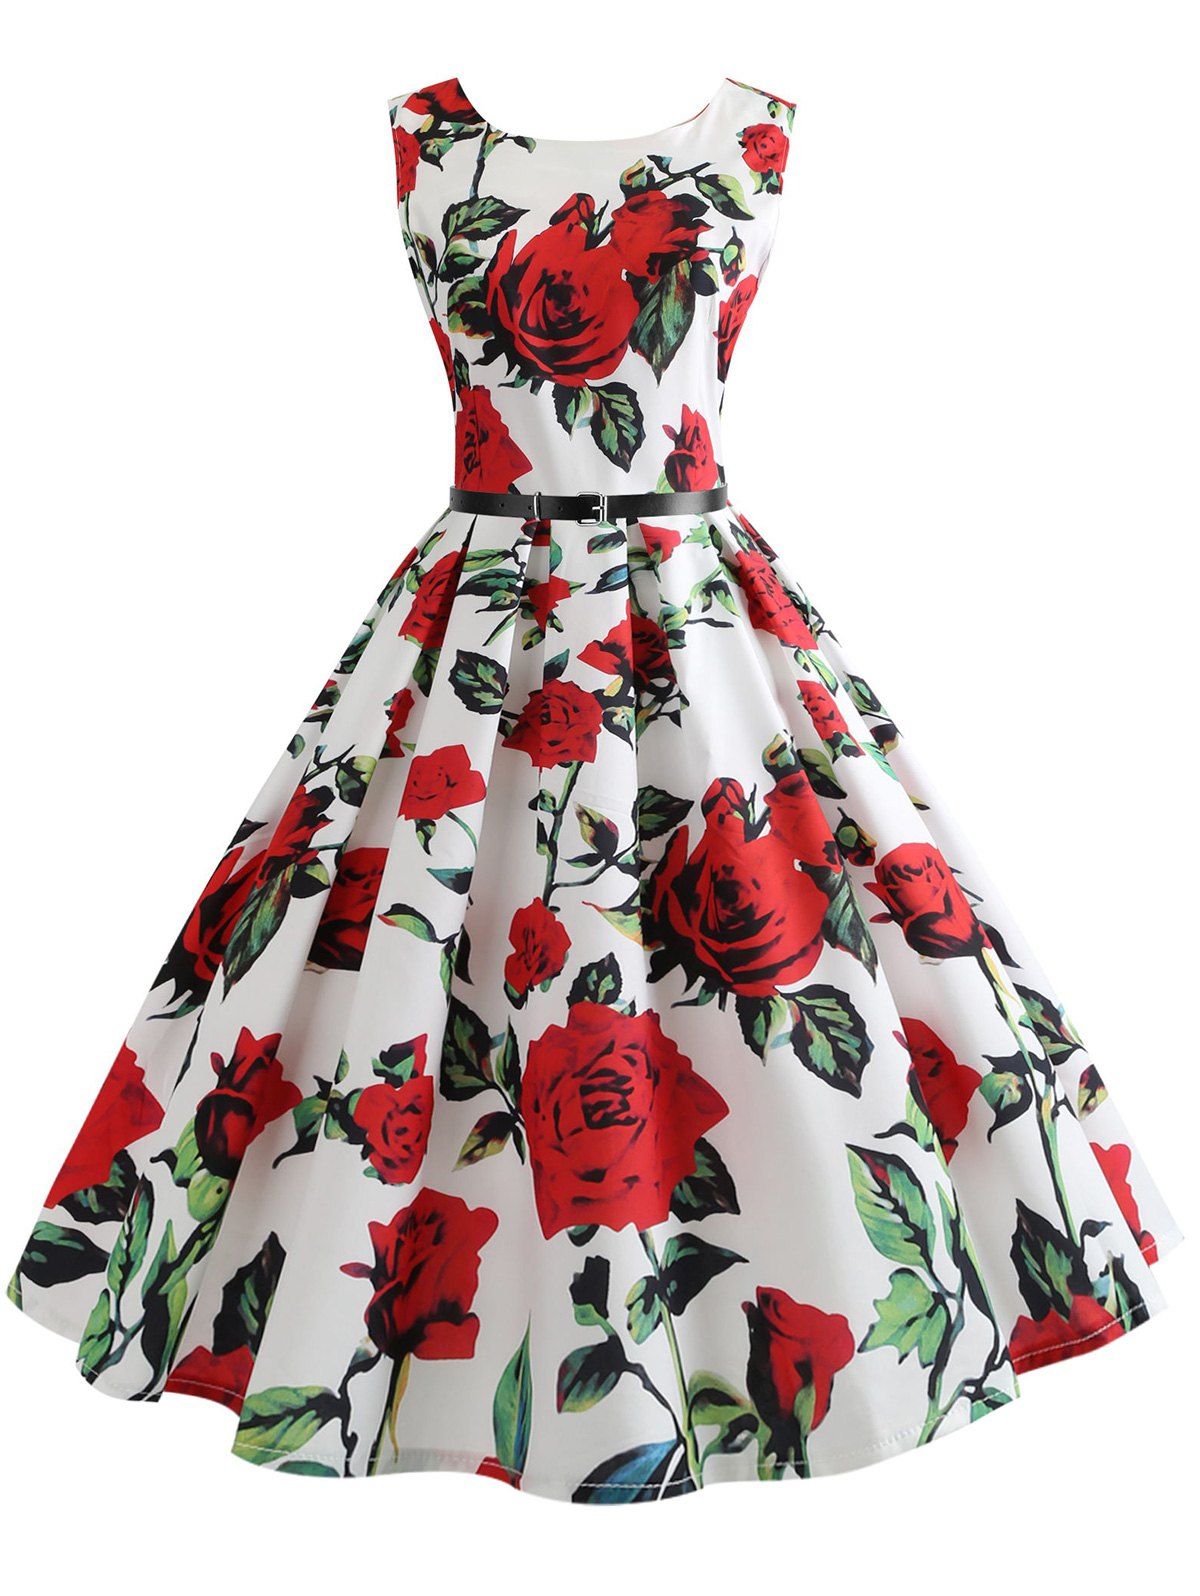 Belted Vintage Sleeveless Floral Print Dress - RED M